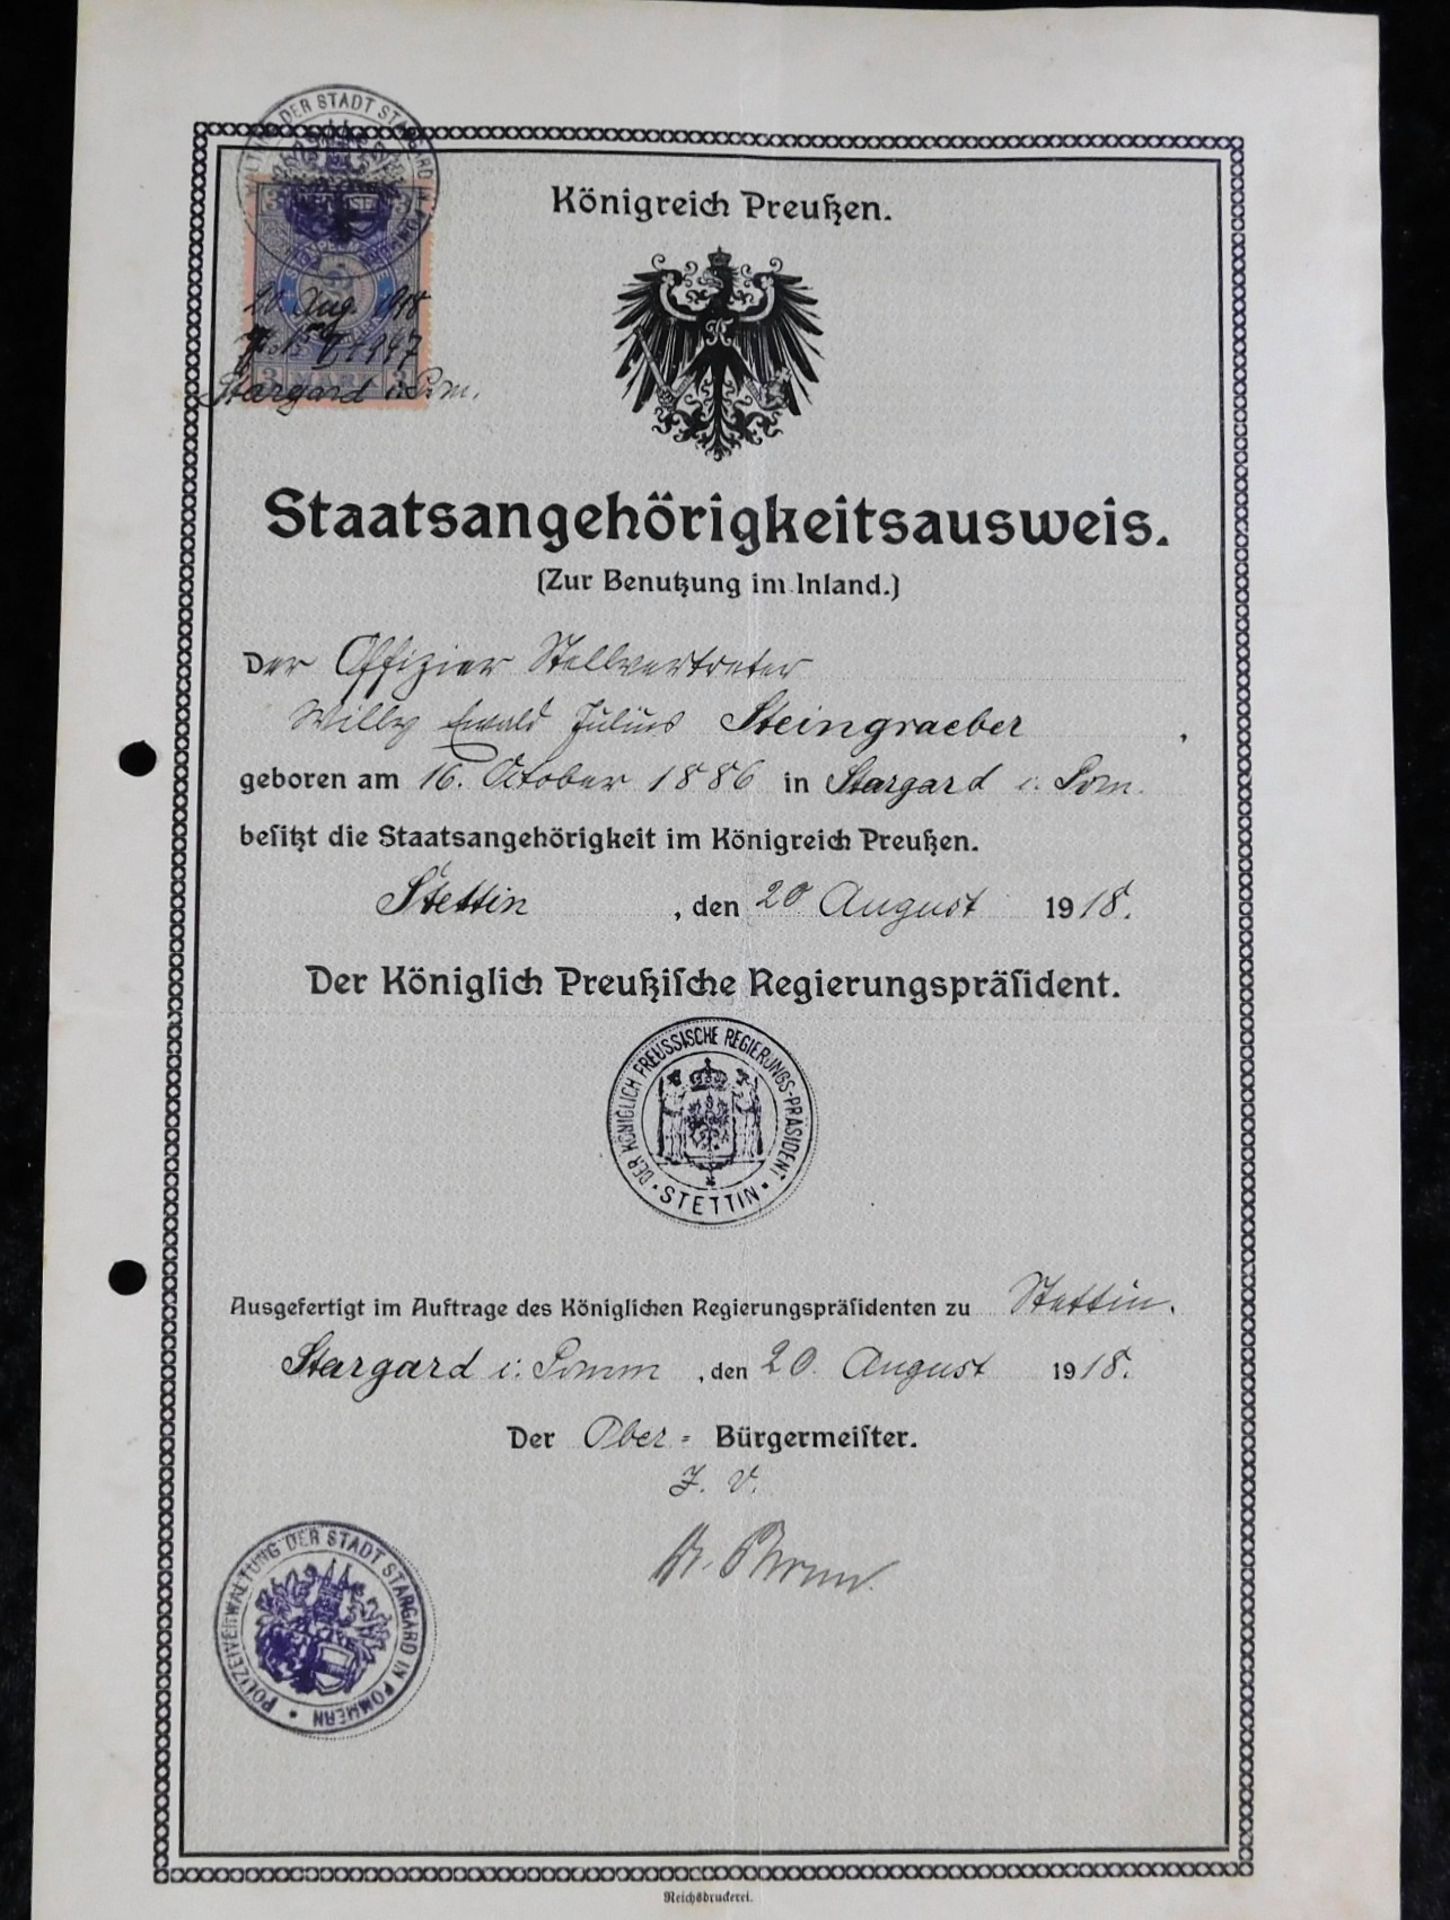 Staatsangehörigkeitsausweis, Preußen 1918